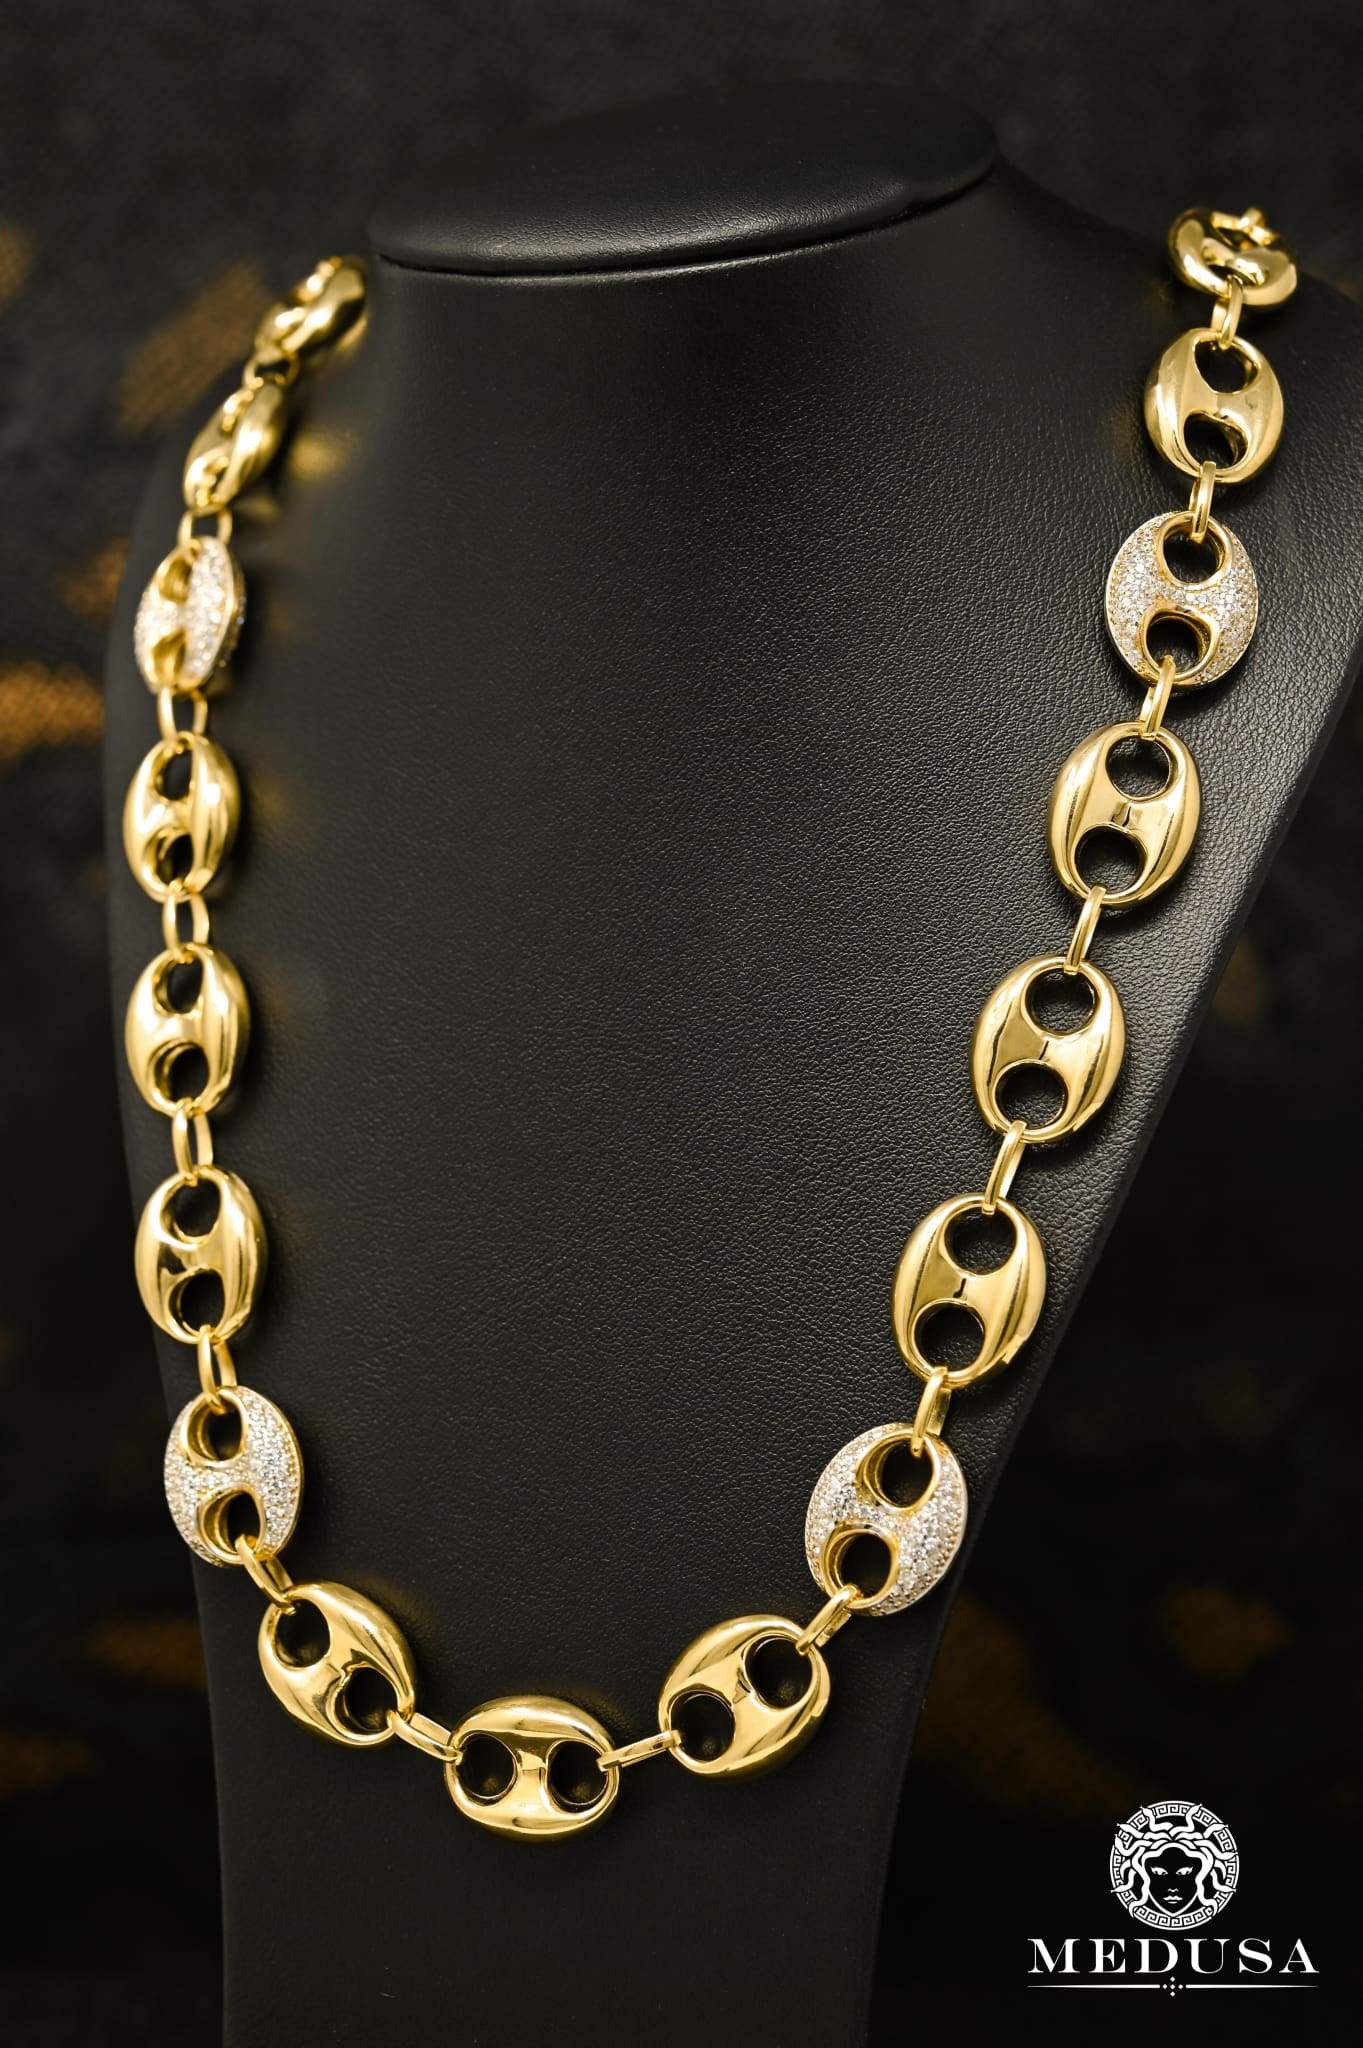 10K Gold Chain | Chain 15mm Gucci Stone